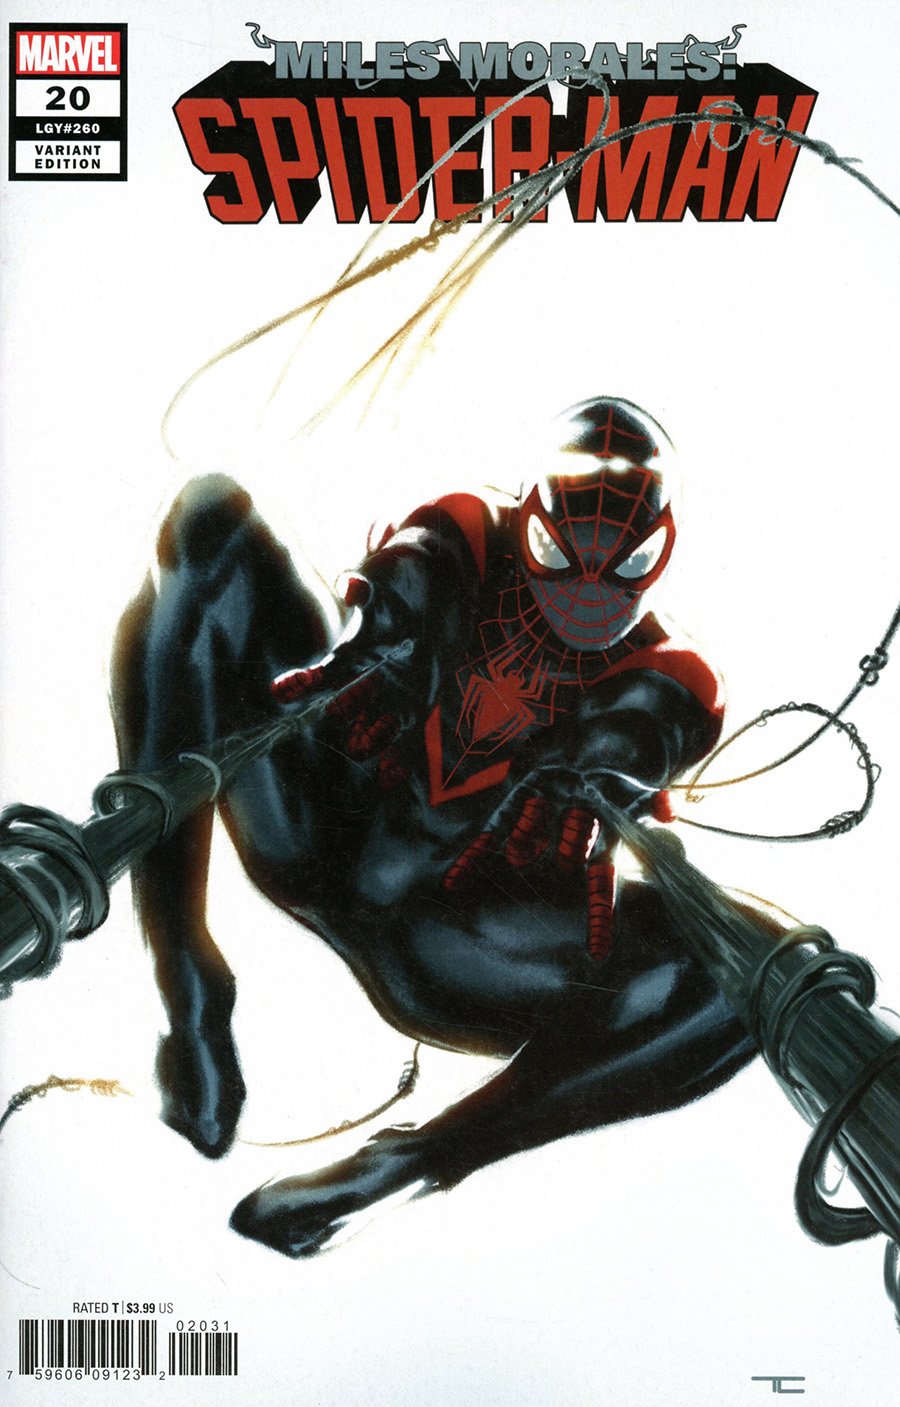 MILES MORALES COMIC BOOK ~ Marvel Comics SPIDER-MAN #25 TAURIN CLARKE VARIANT 